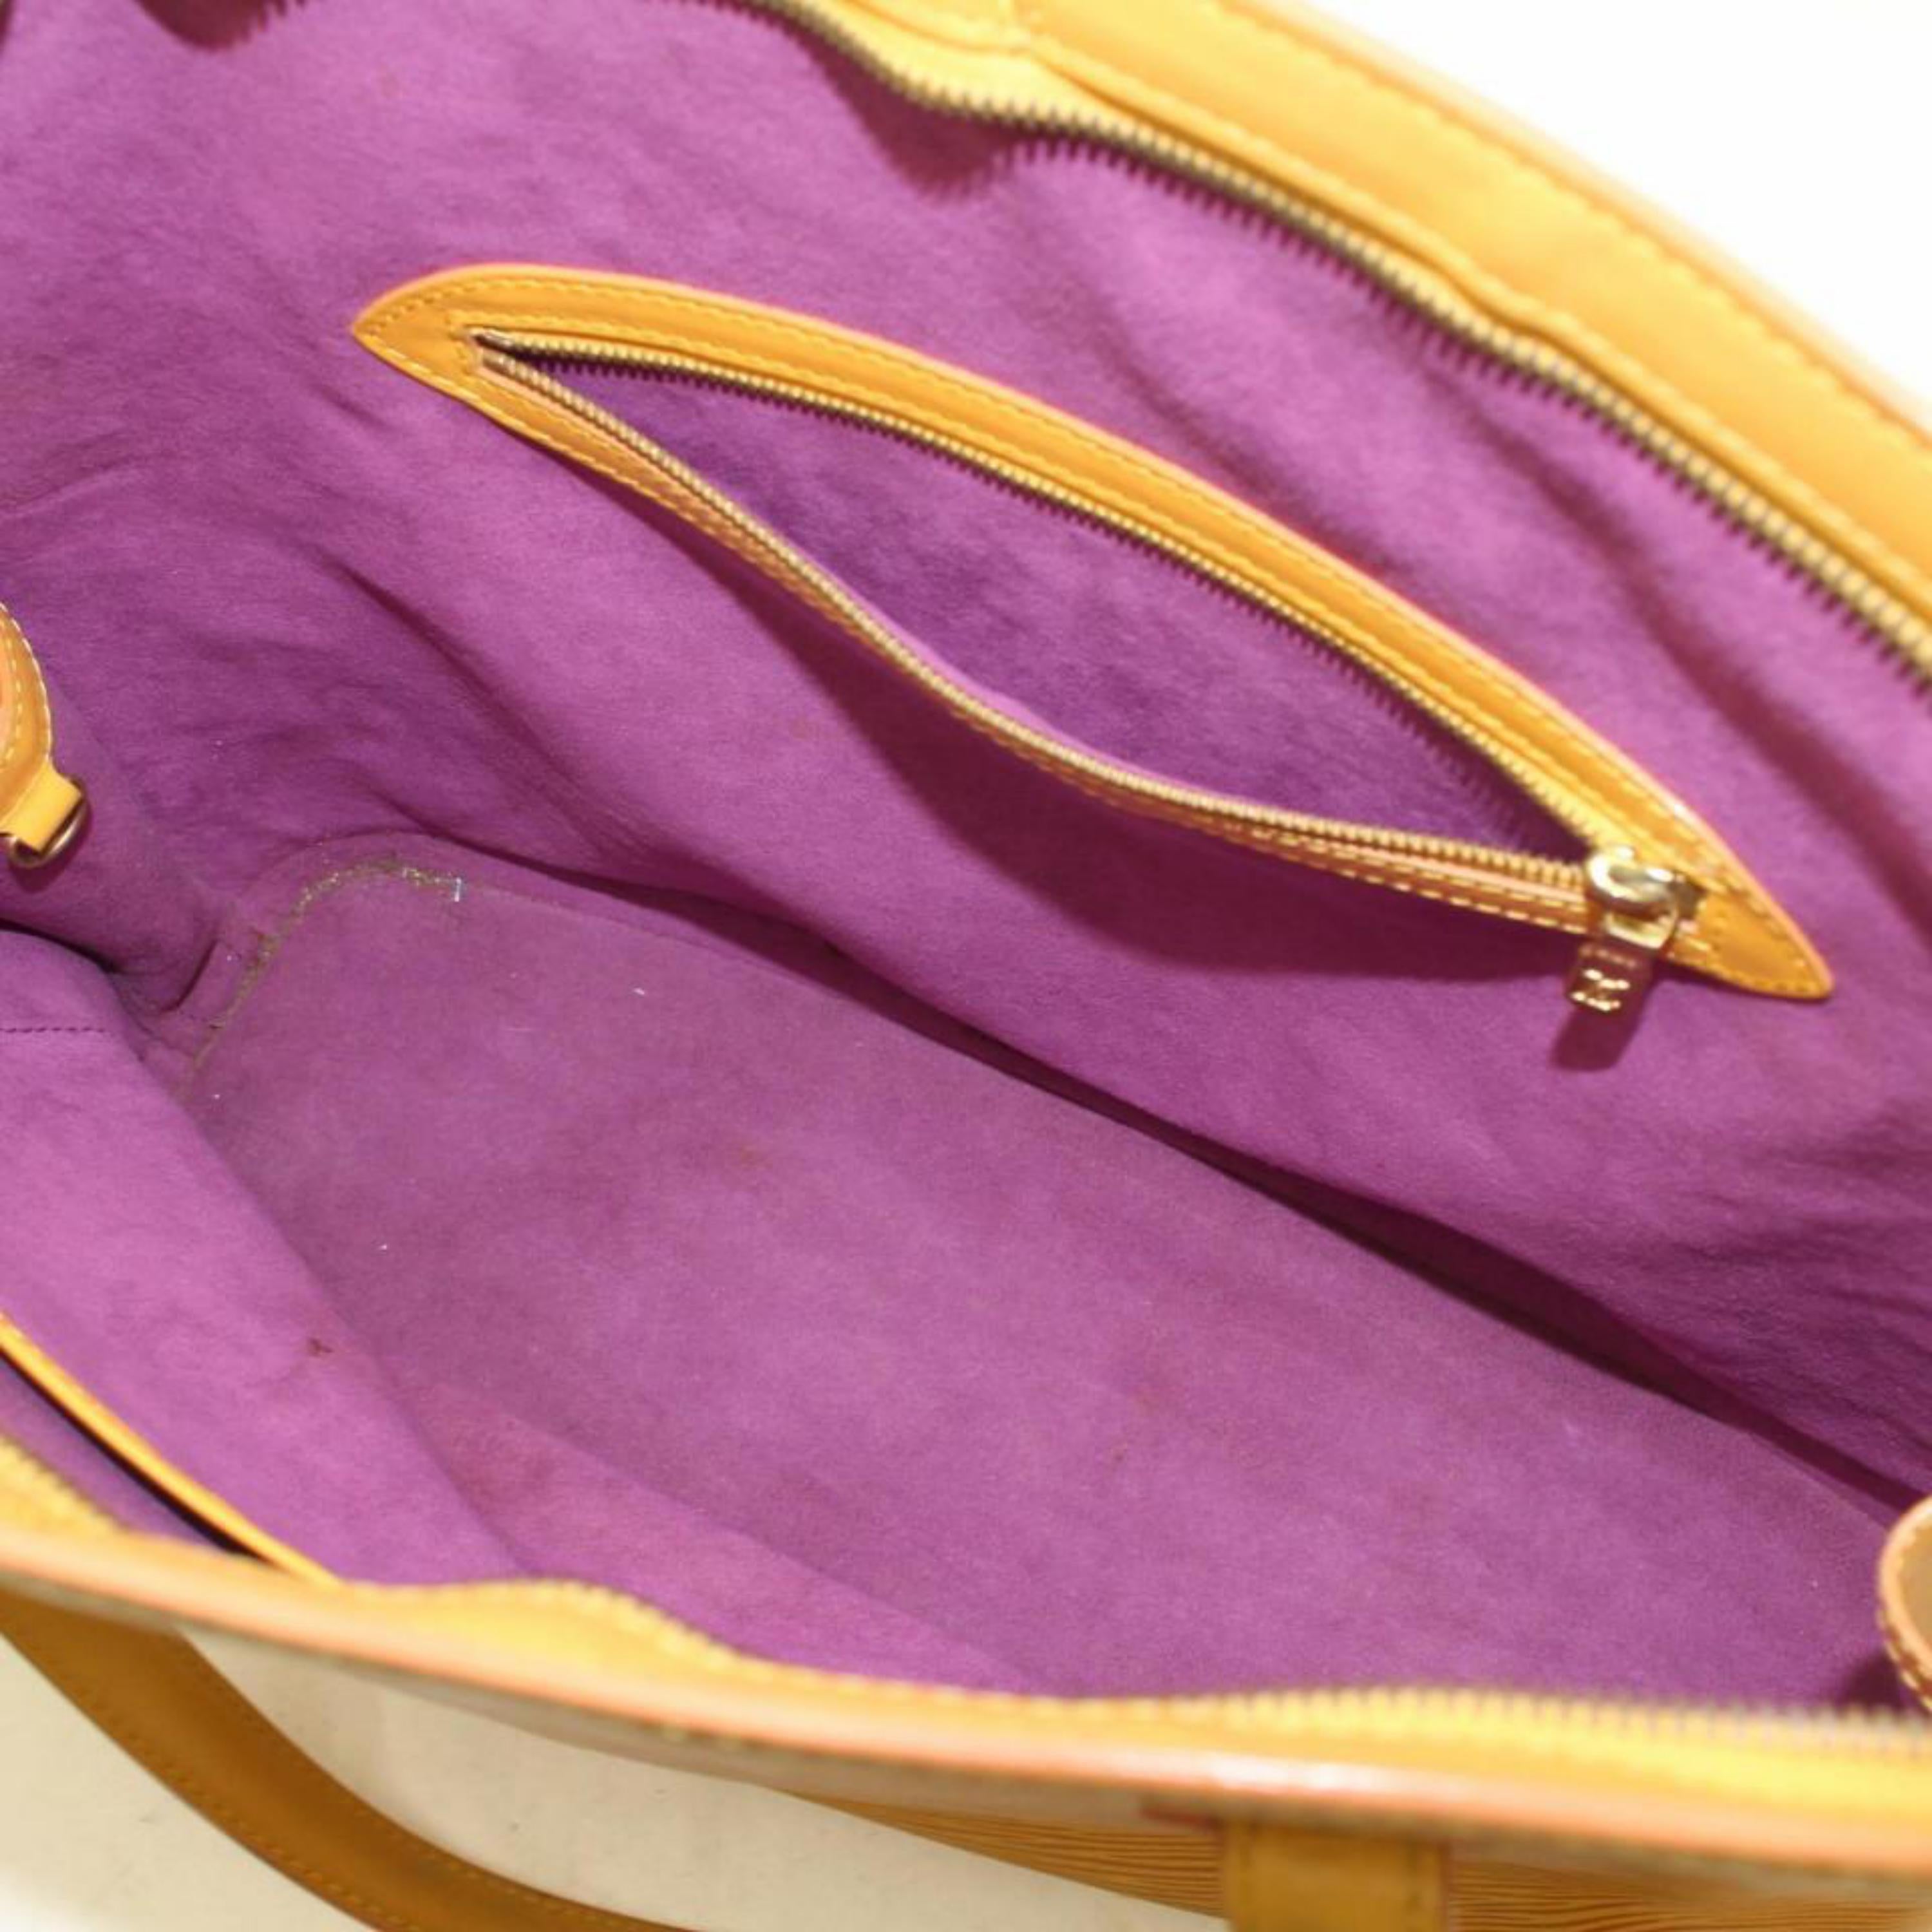 Women's Louis Vuitton Lussac Tassil Zip Tote 869647 Yellow Leather Shoulder Bag For Sale